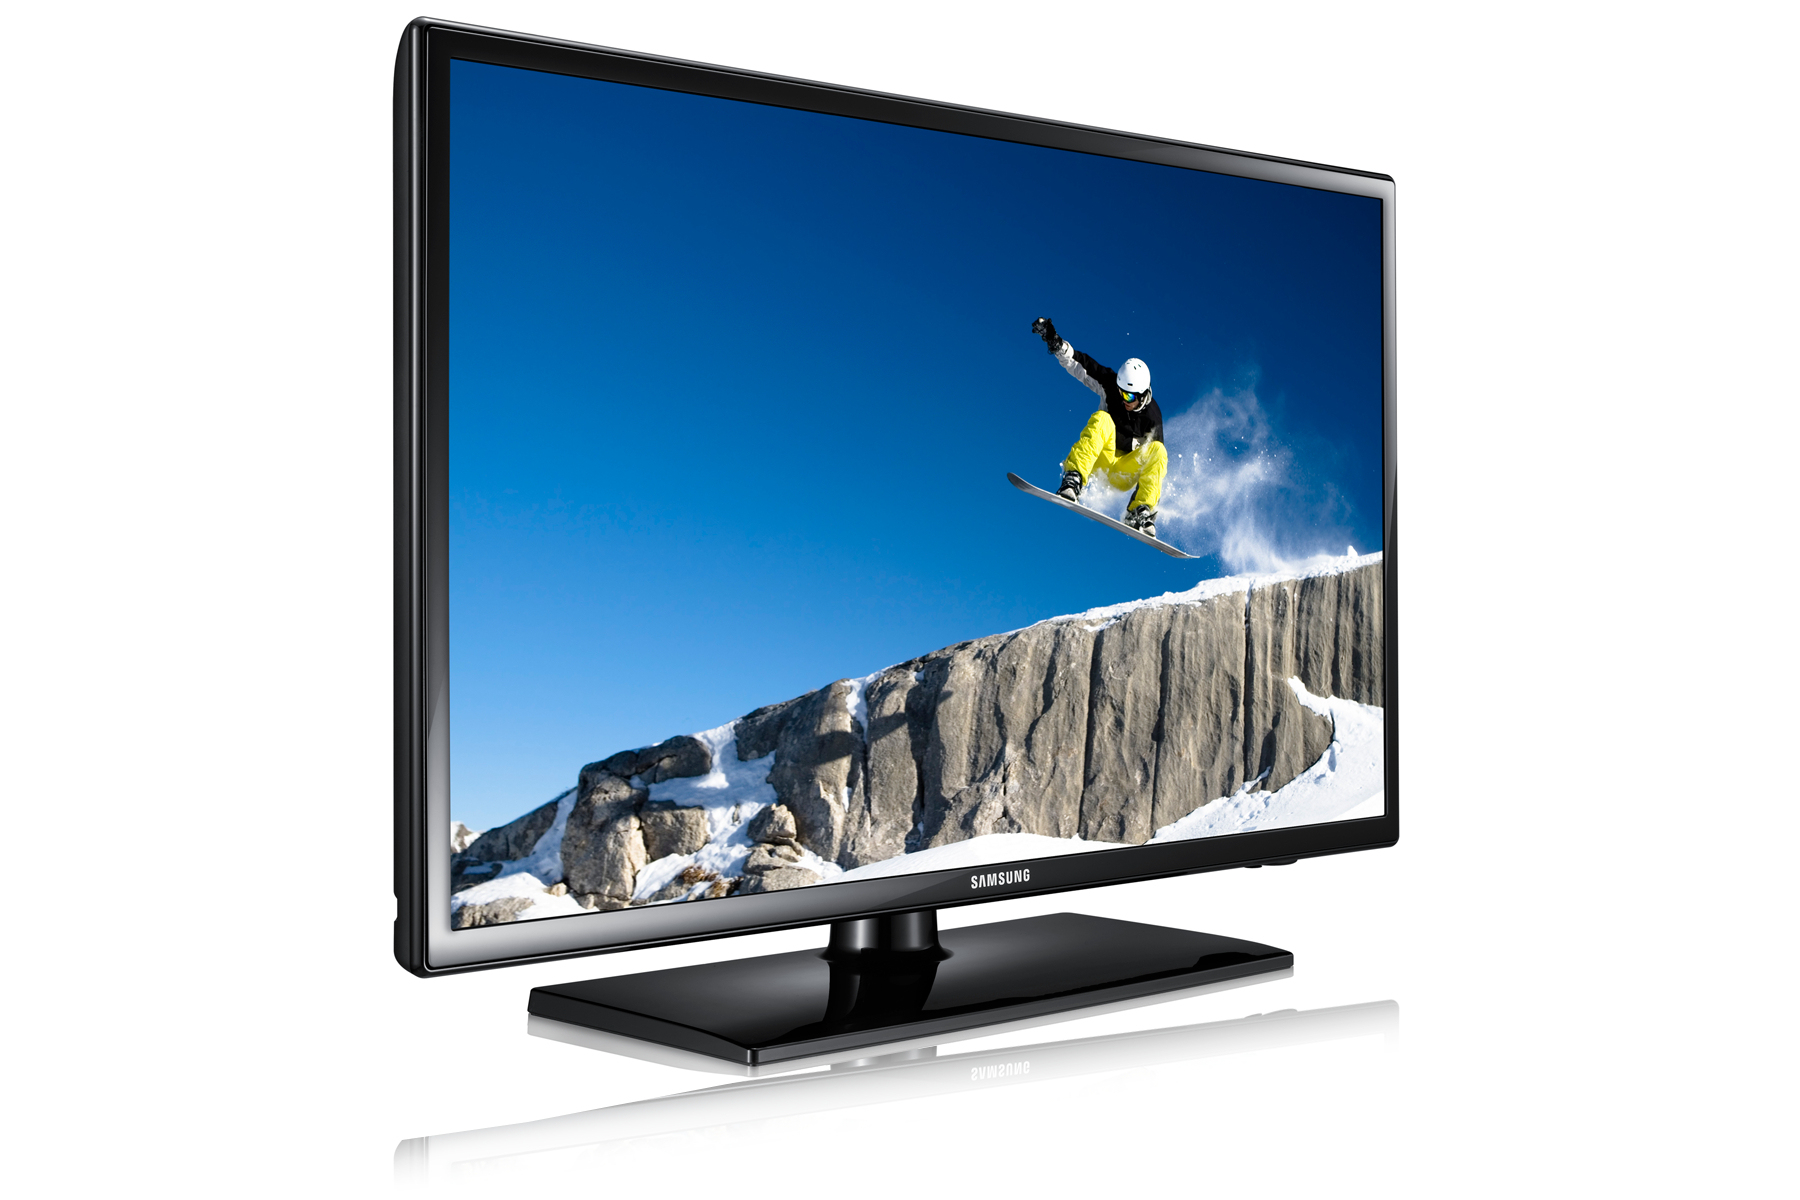 Samsung tv 32 дюймов. Телевизор самсунг 32 дюйма. Телевизор самсунг 24 дюйма. Плазменная панель самсунг.